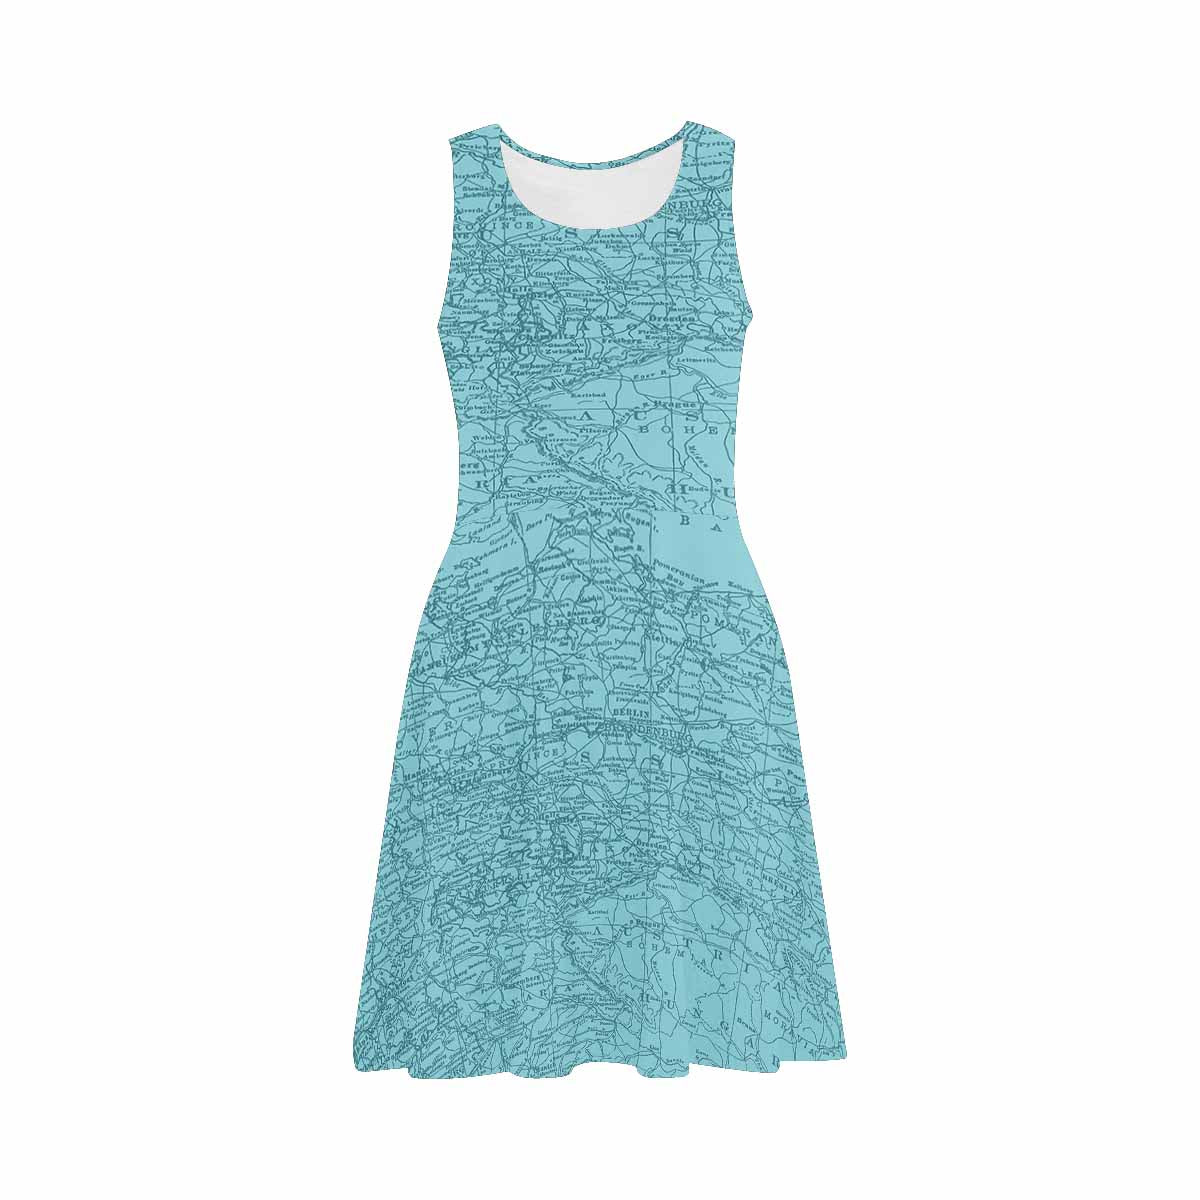 Antique Map casual summer dress, MODEL 09534, design 51